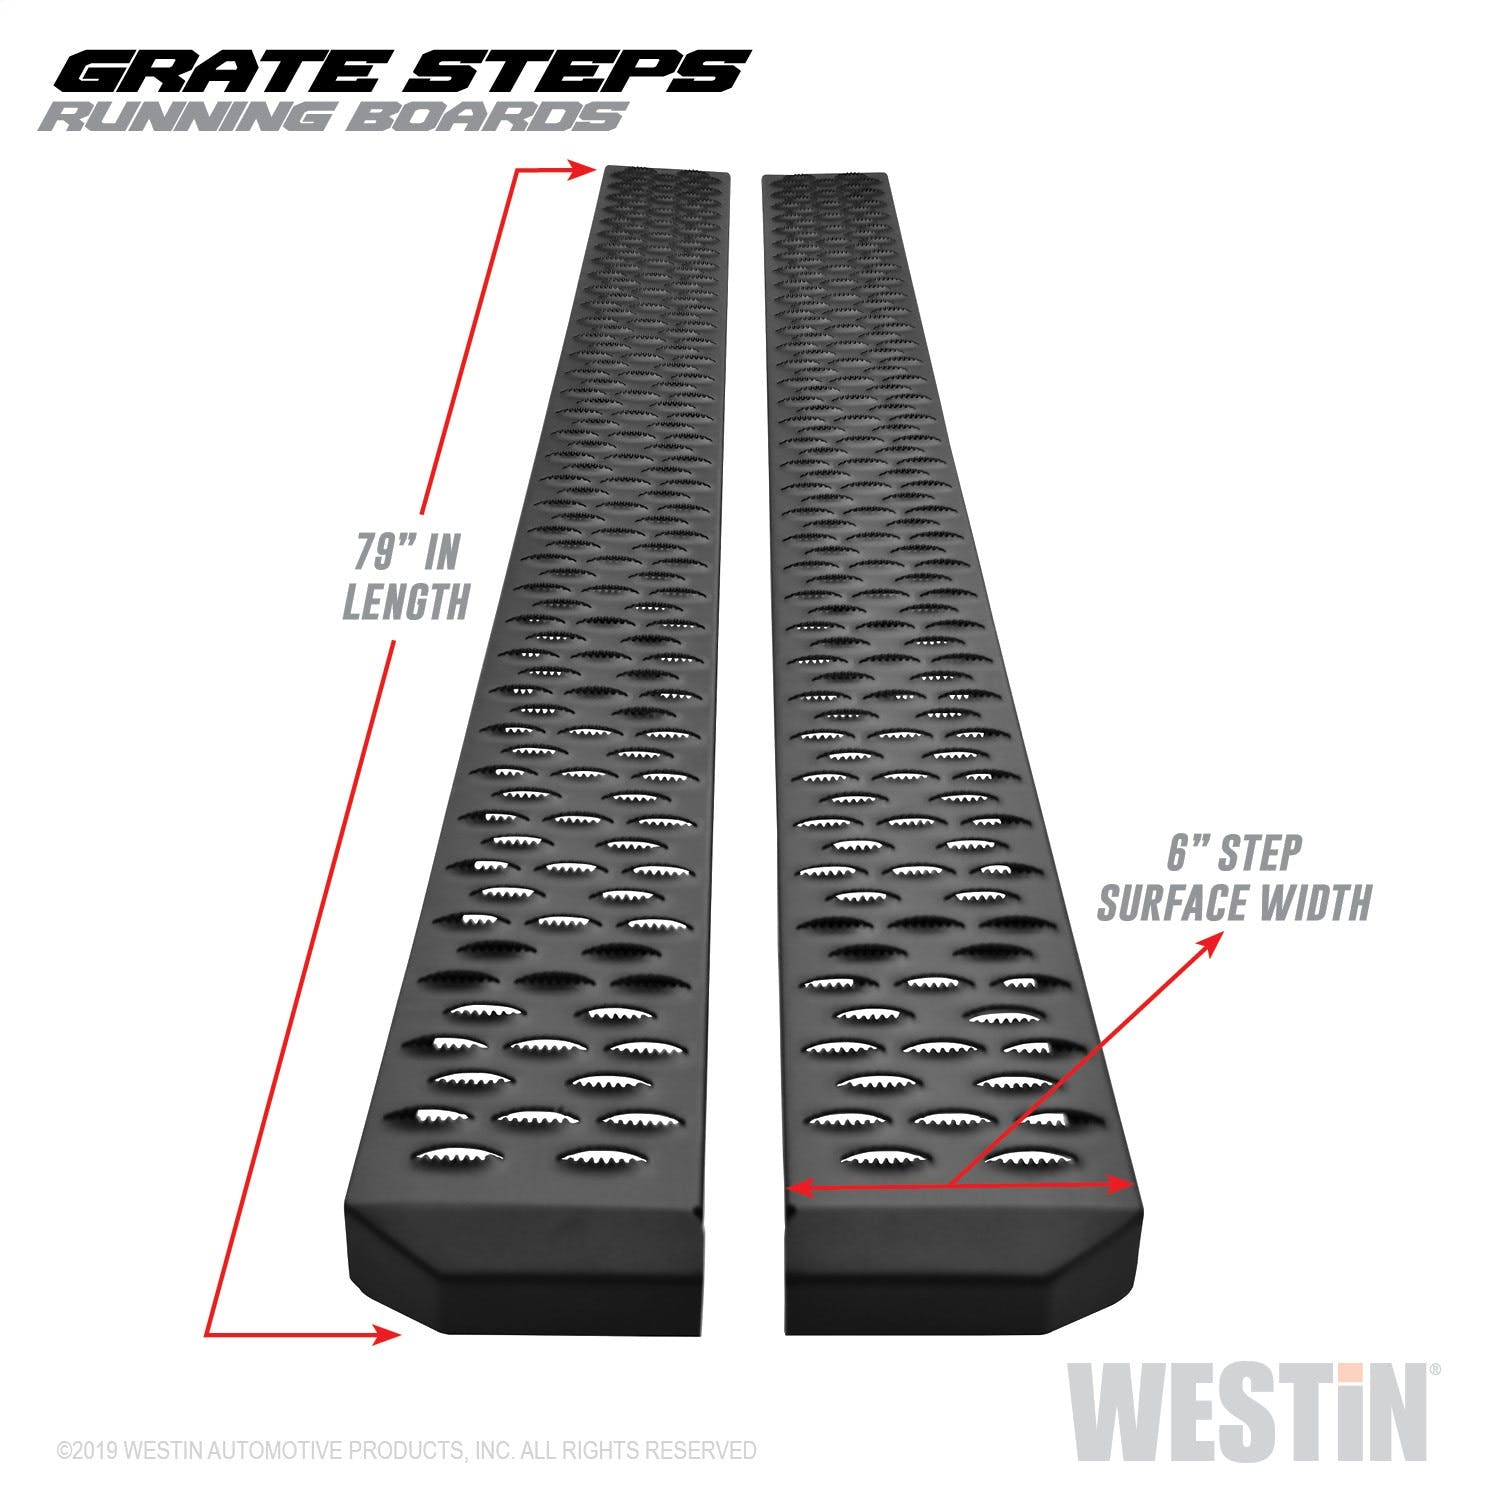 Westin Automotive 27-74735 Grate Steps Running Boards Textured Black